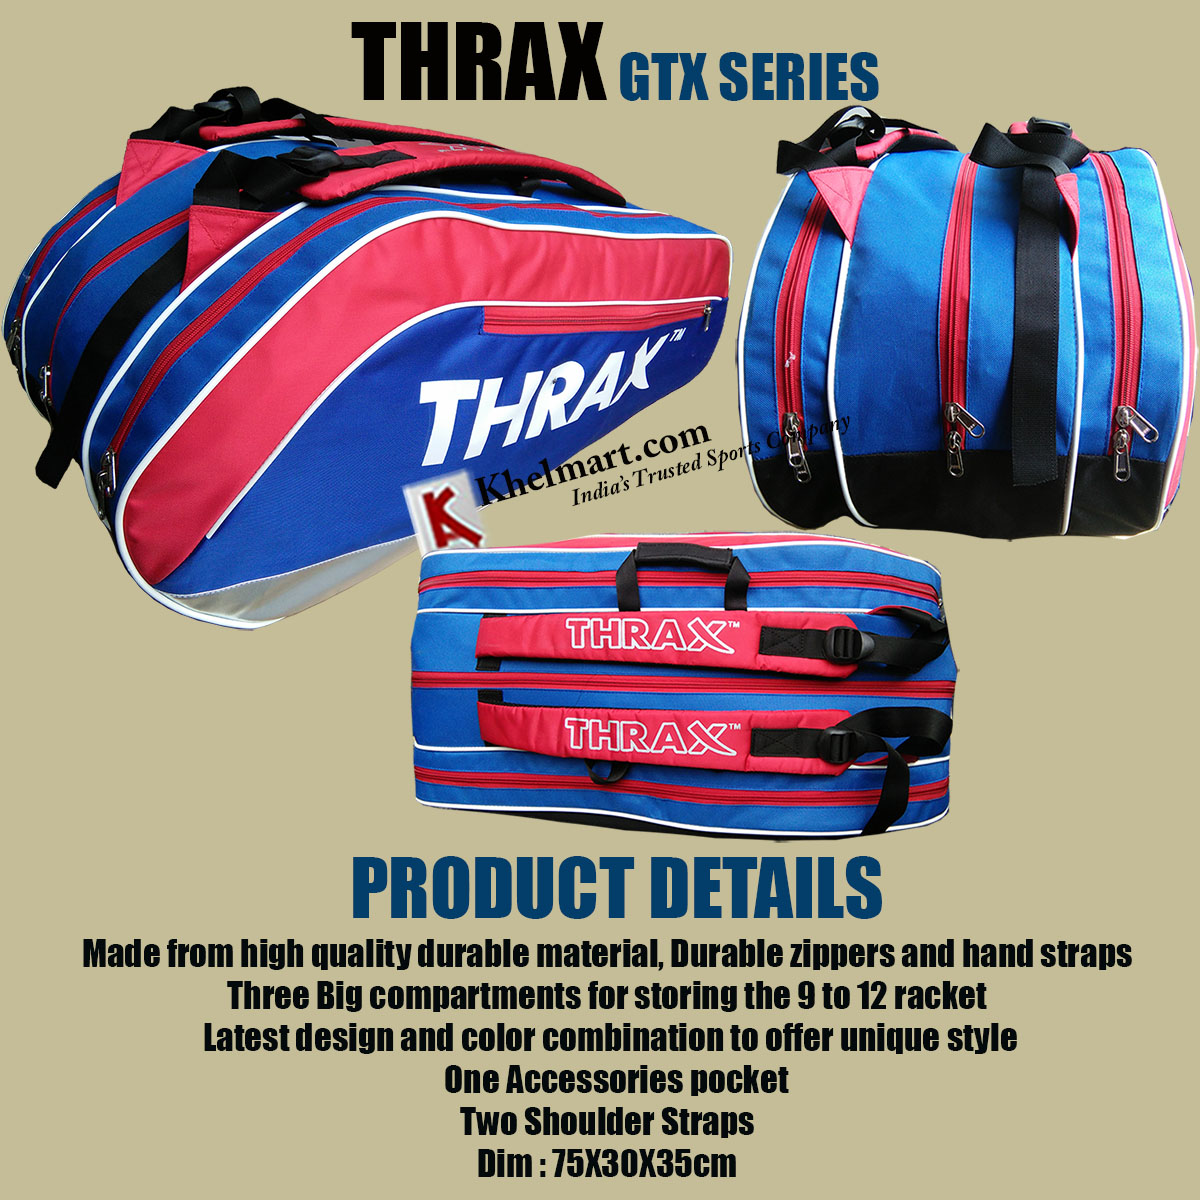 Thrax_Gtx_Series_Badminton_kit_Bag.jpg